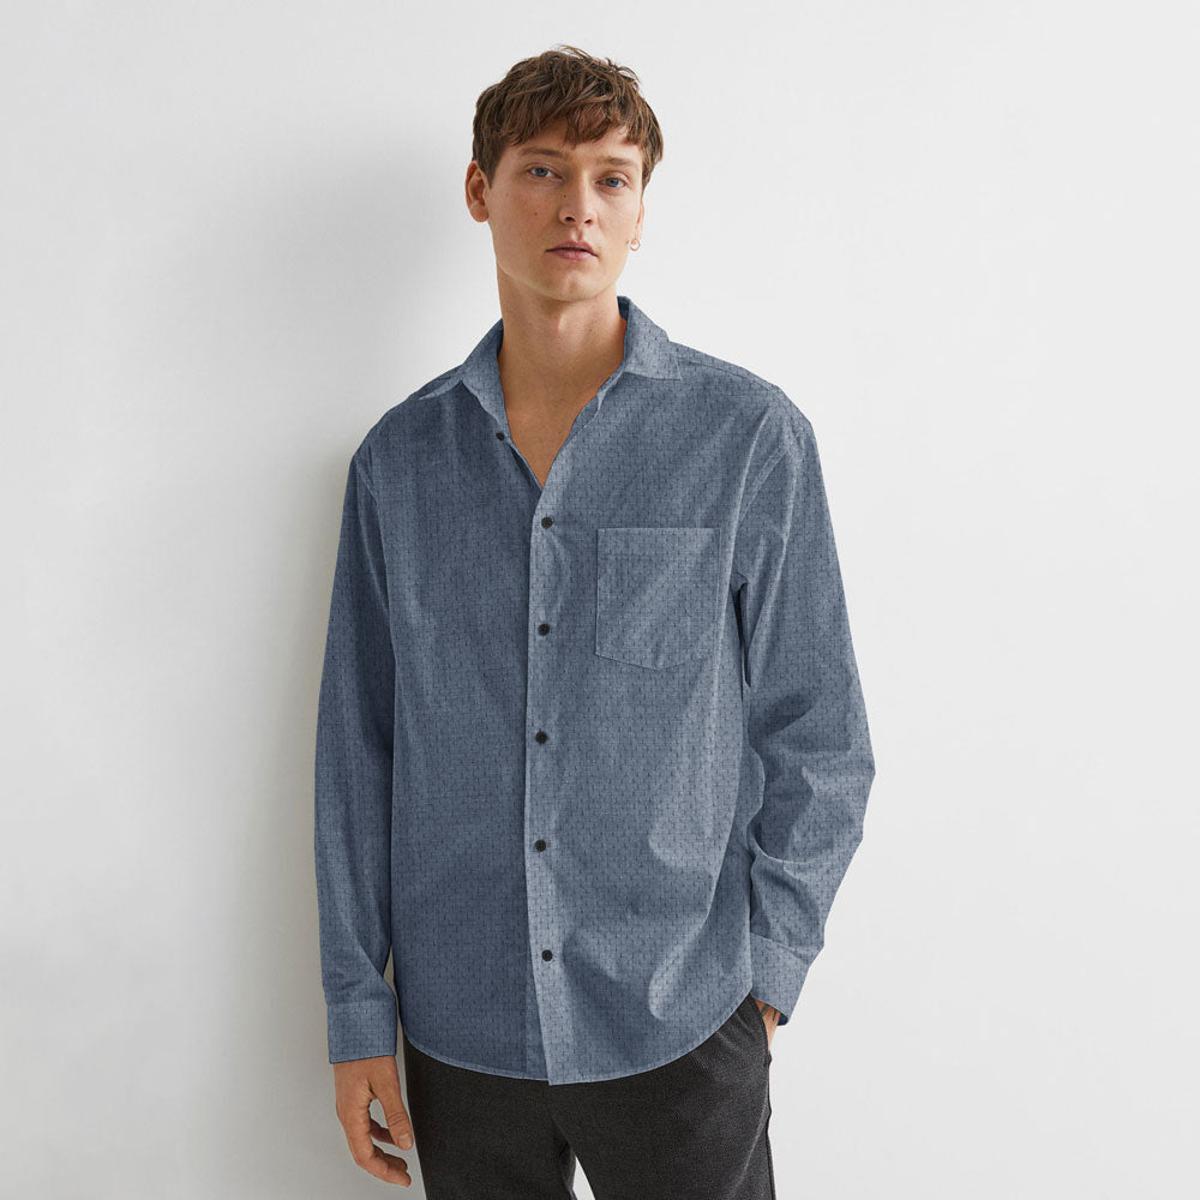 Elo Cool Work Men's Check Design Long Sleeve Casual Shirt